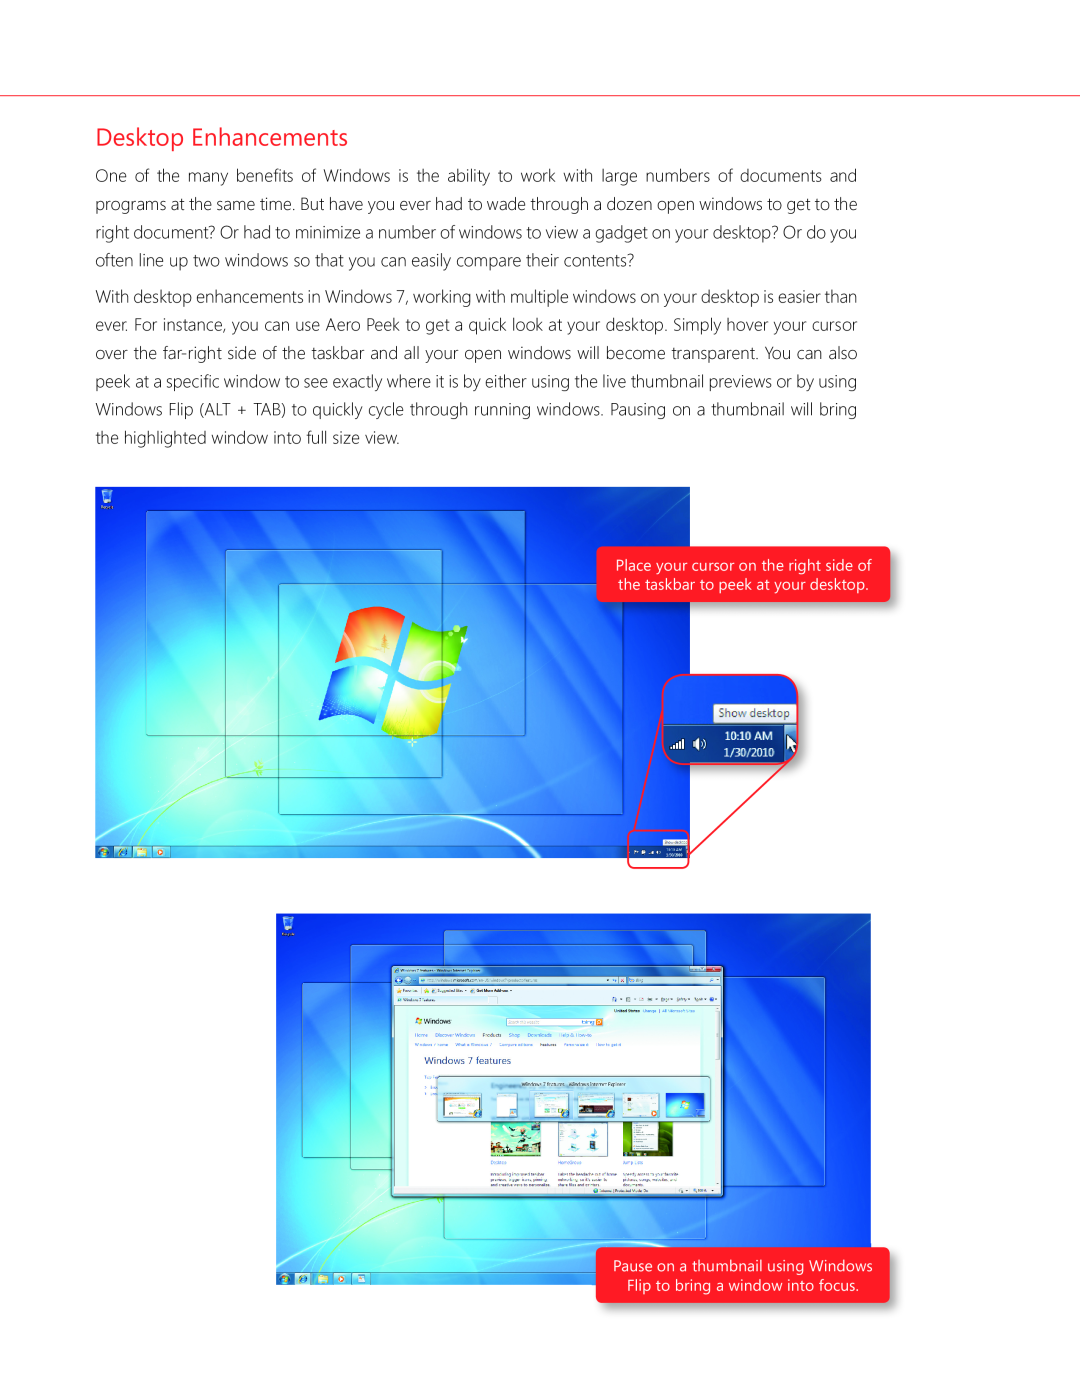 Microsoft GFC02050, GLC00182 Desktop Enhancements, Pause on a thumbnail using Windows Flip to bring a window into focus 